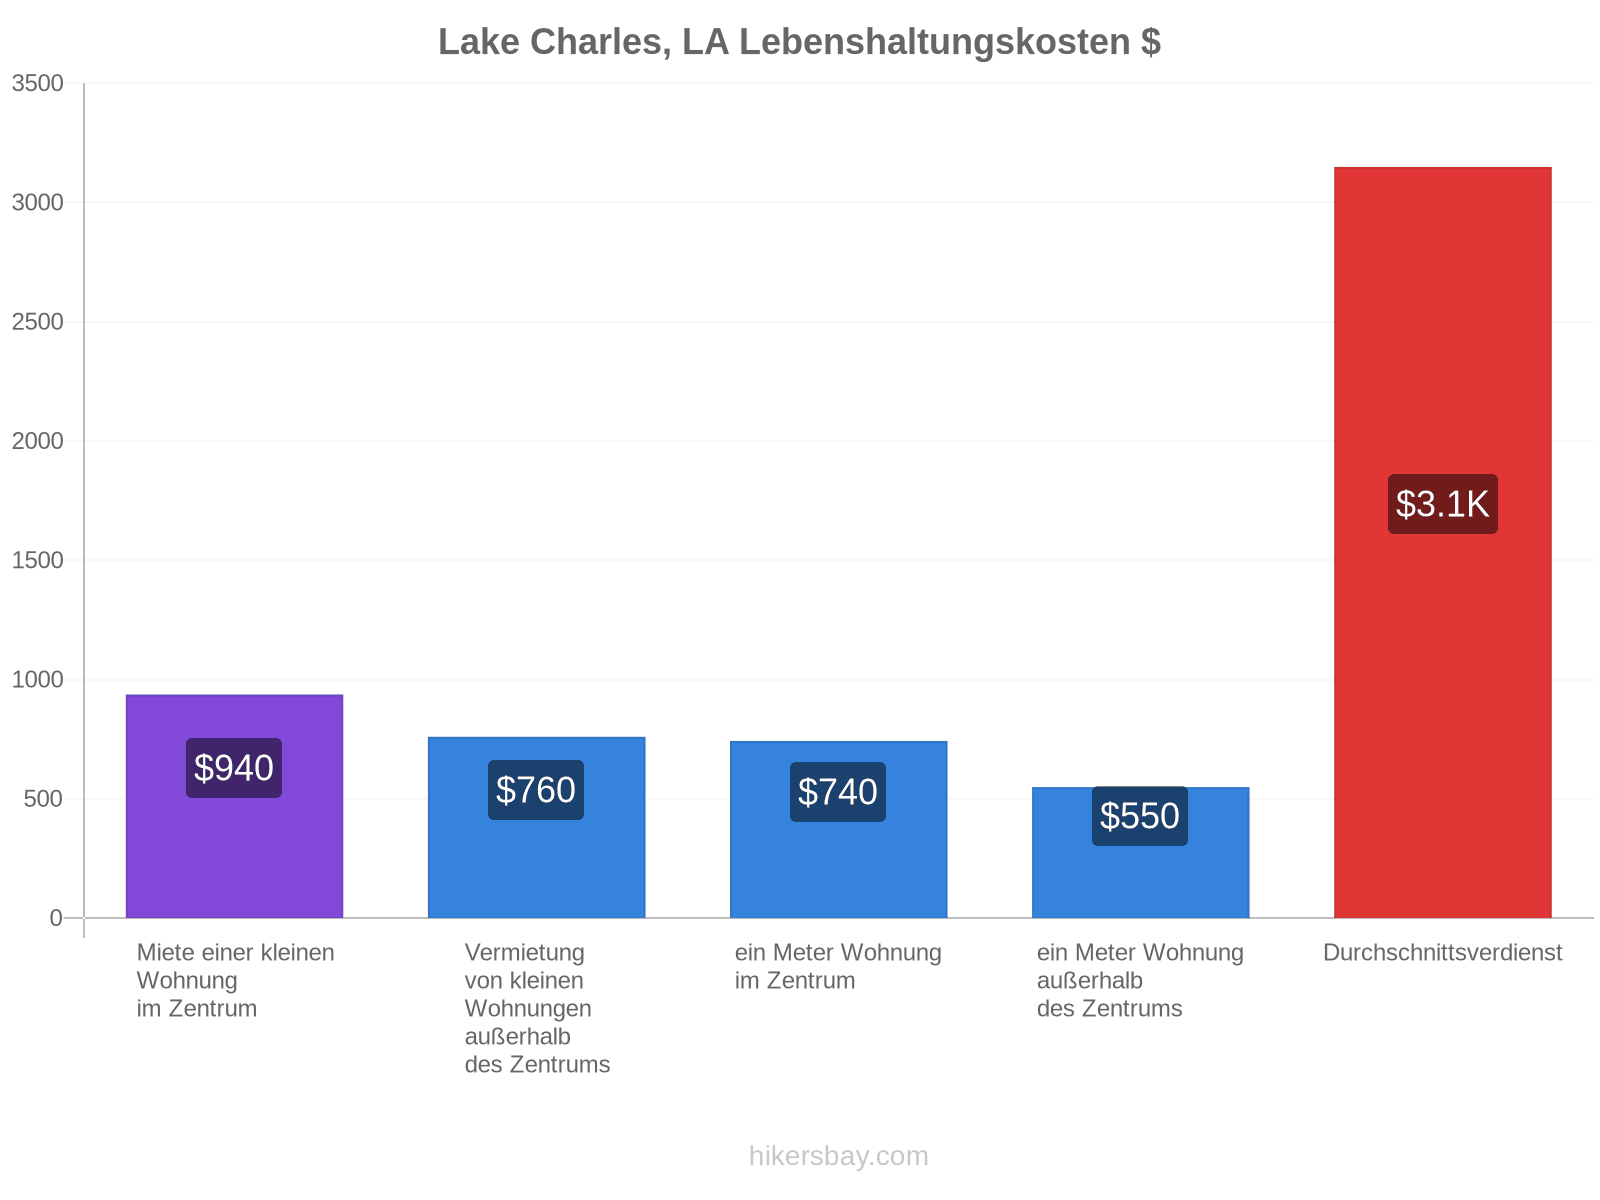 Lake Charles, LA Lebenshaltungskosten hikersbay.com